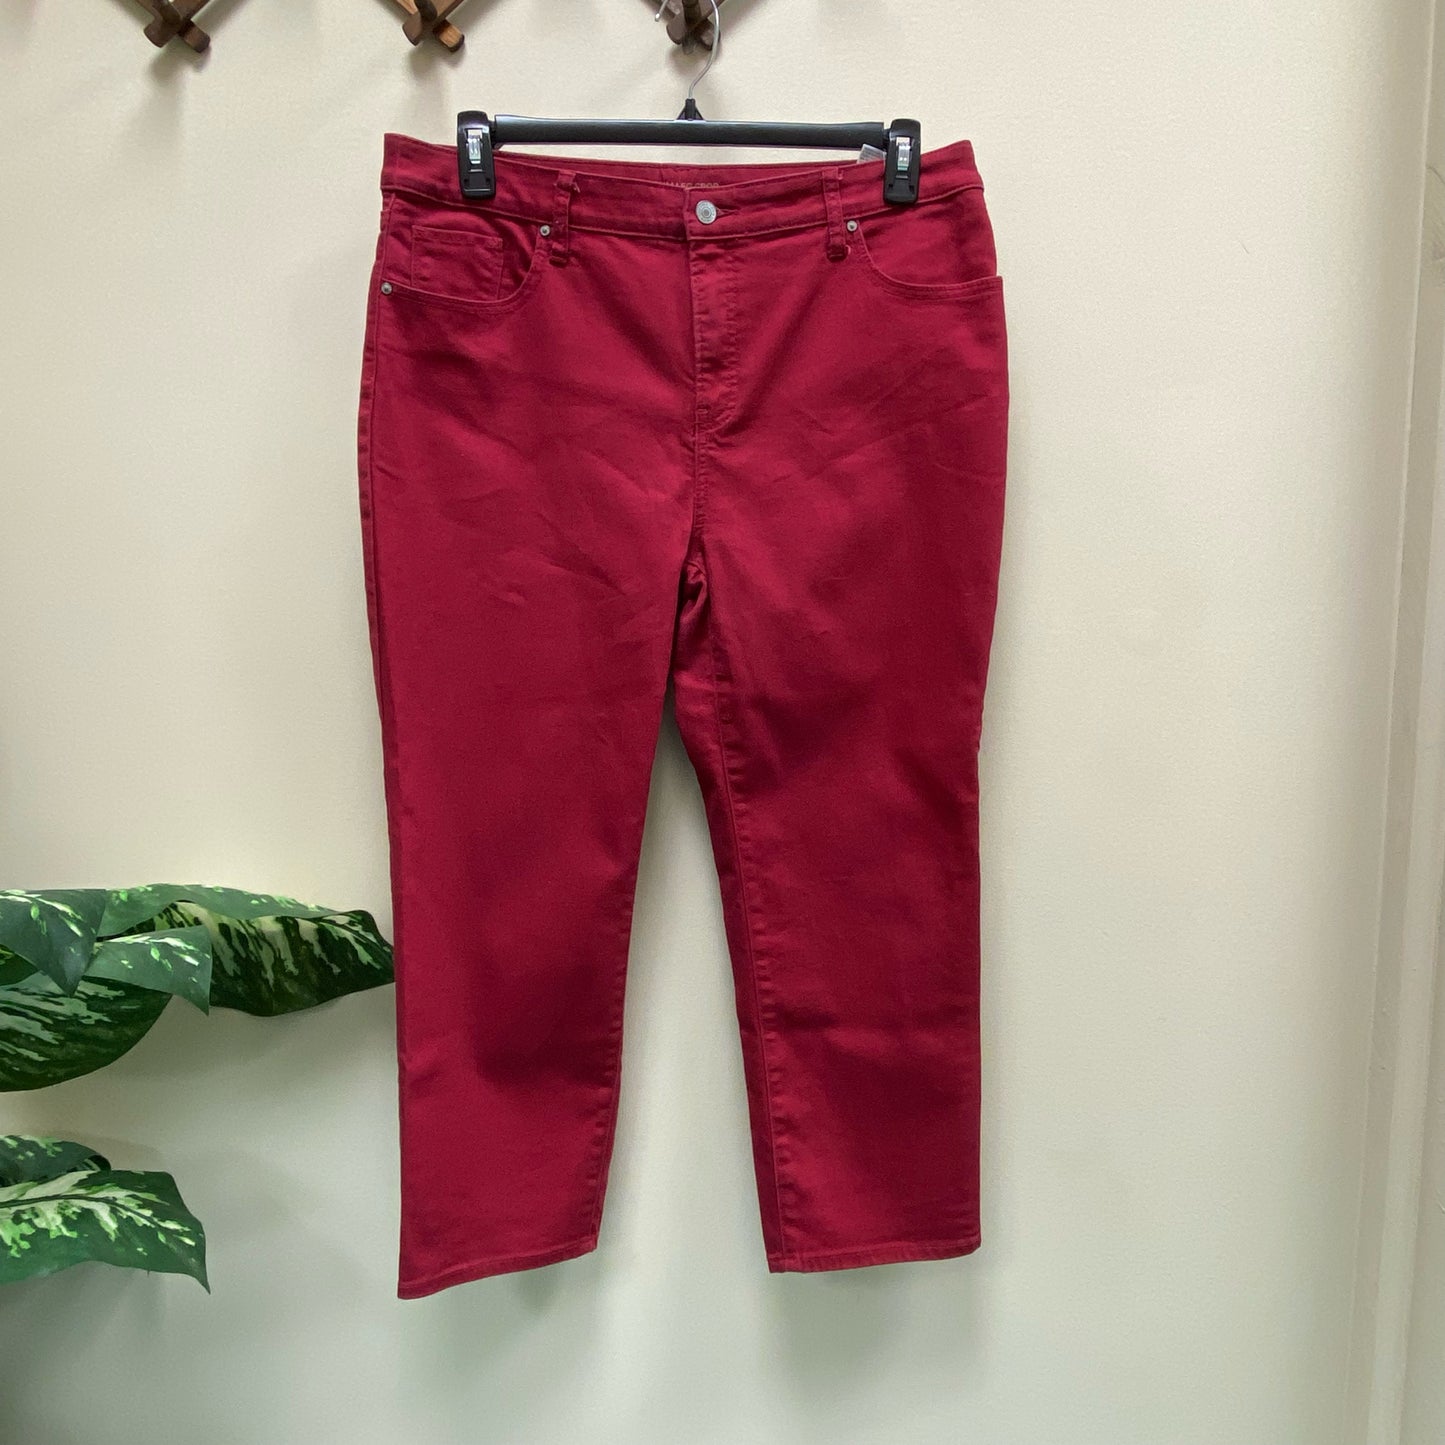 Chico's Slim Leg Crop Jeans - Size 14